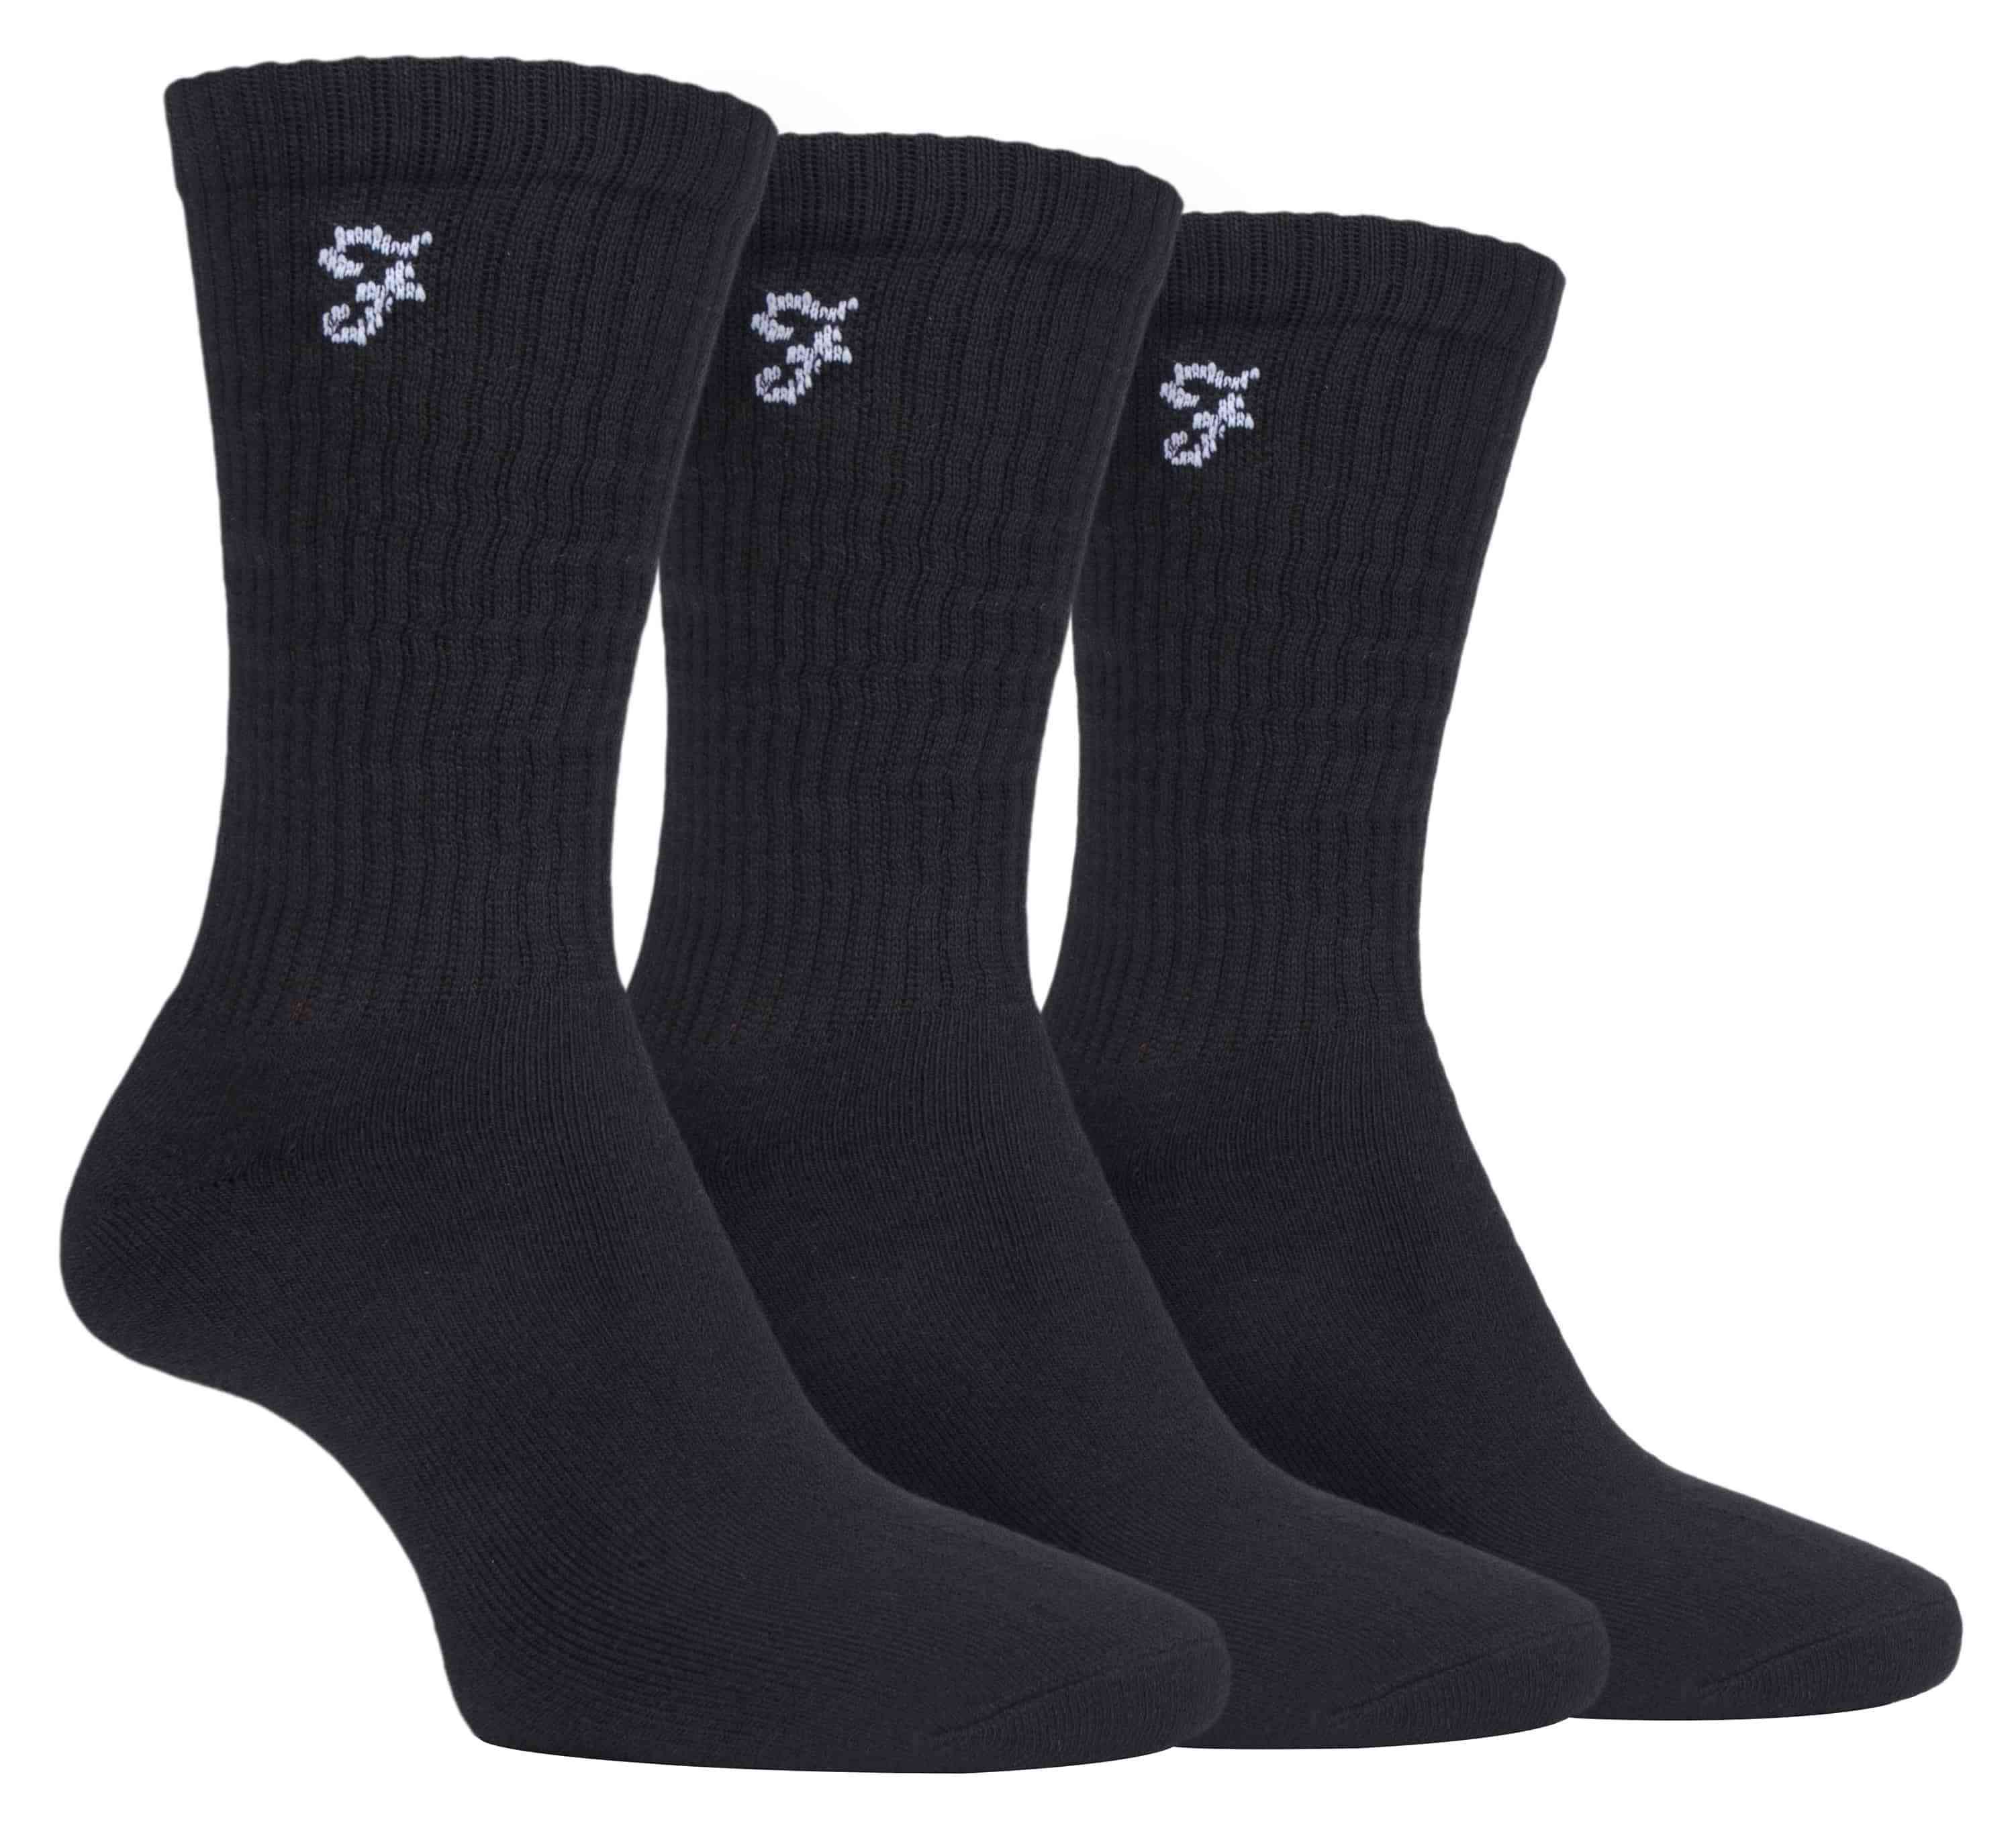 3 Pairs Men's Cushioned Sports Socks